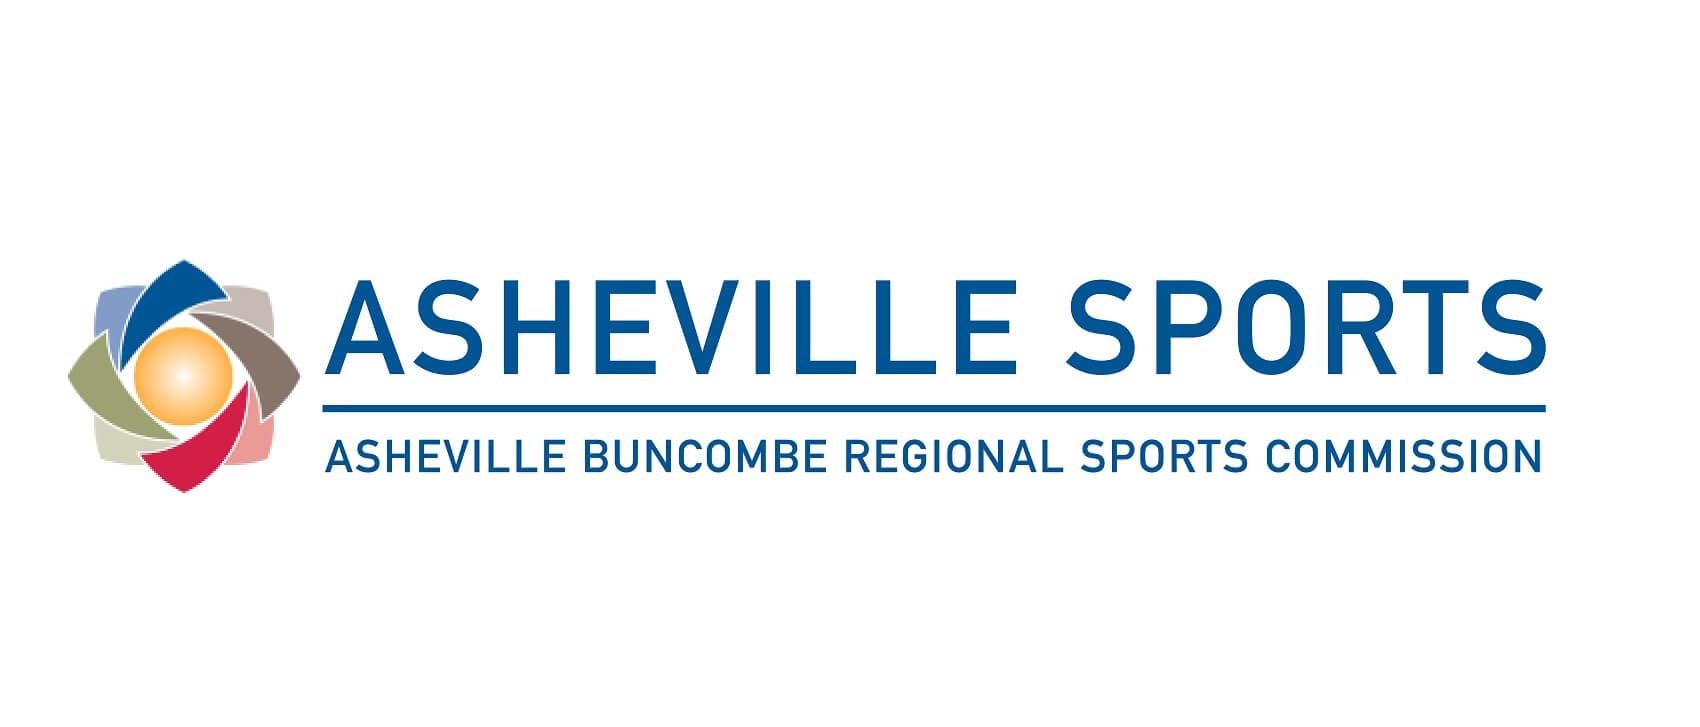 Asheville Buncombe Regional Sports Commission